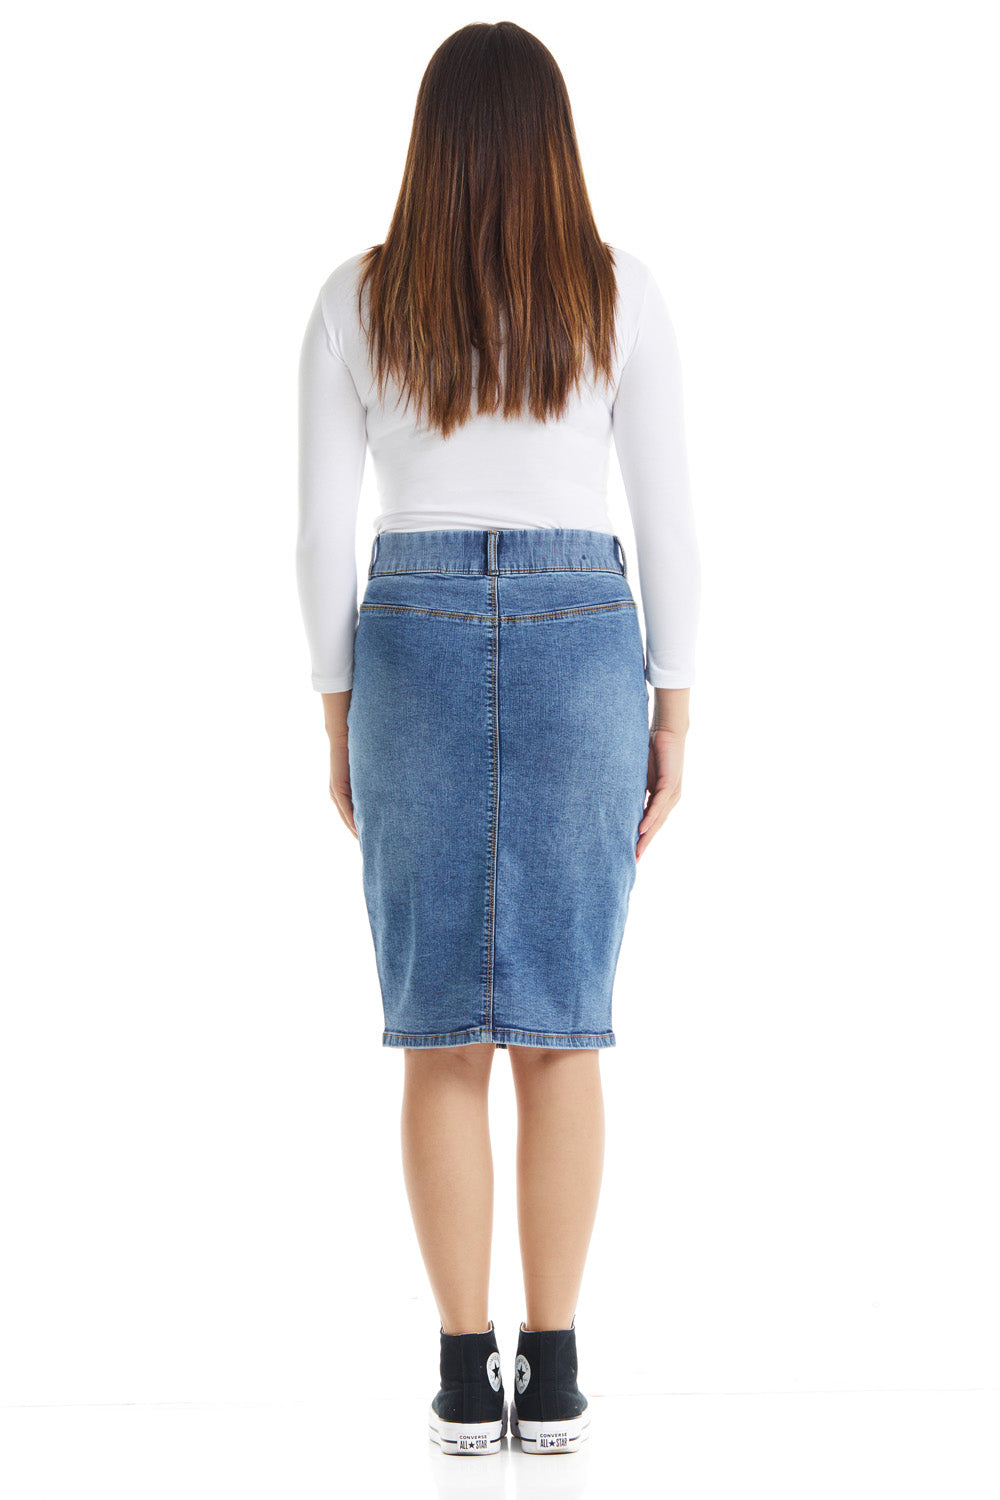 Esteez BROOKLYN Denim Skirt - Below the knee Jean Skirt for women - Vintage Blue